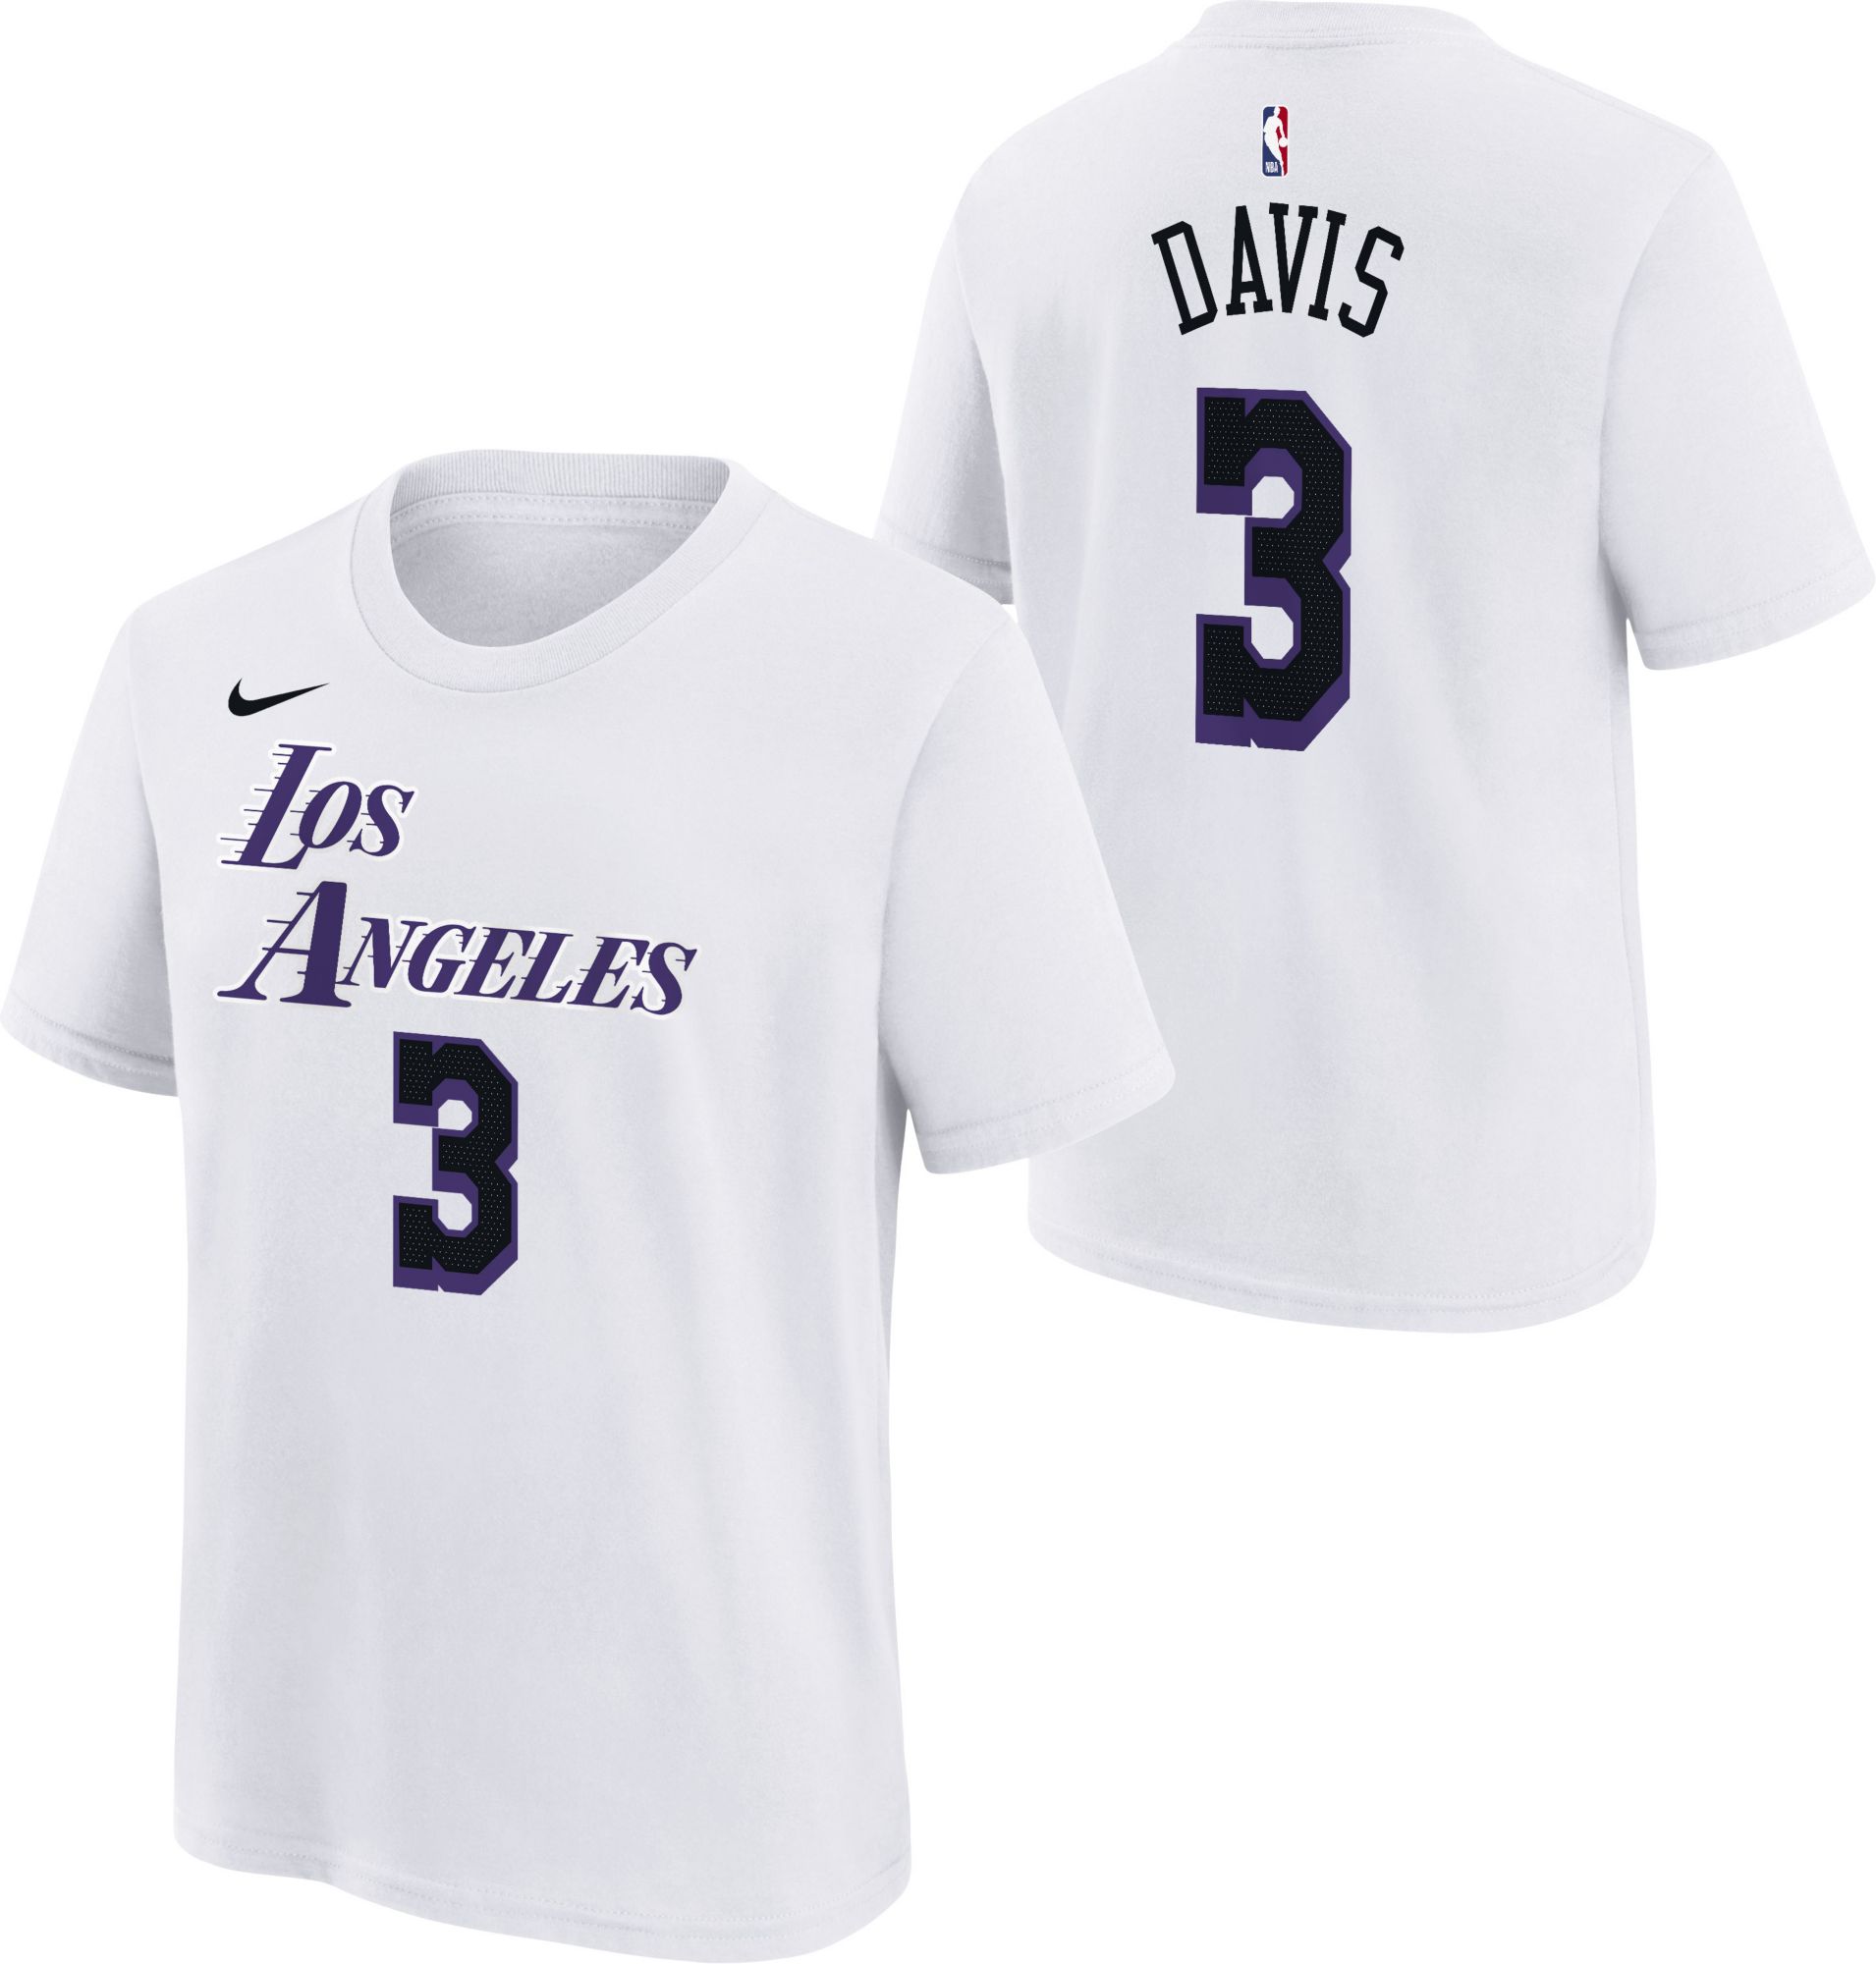 Dick Davis youth jersey